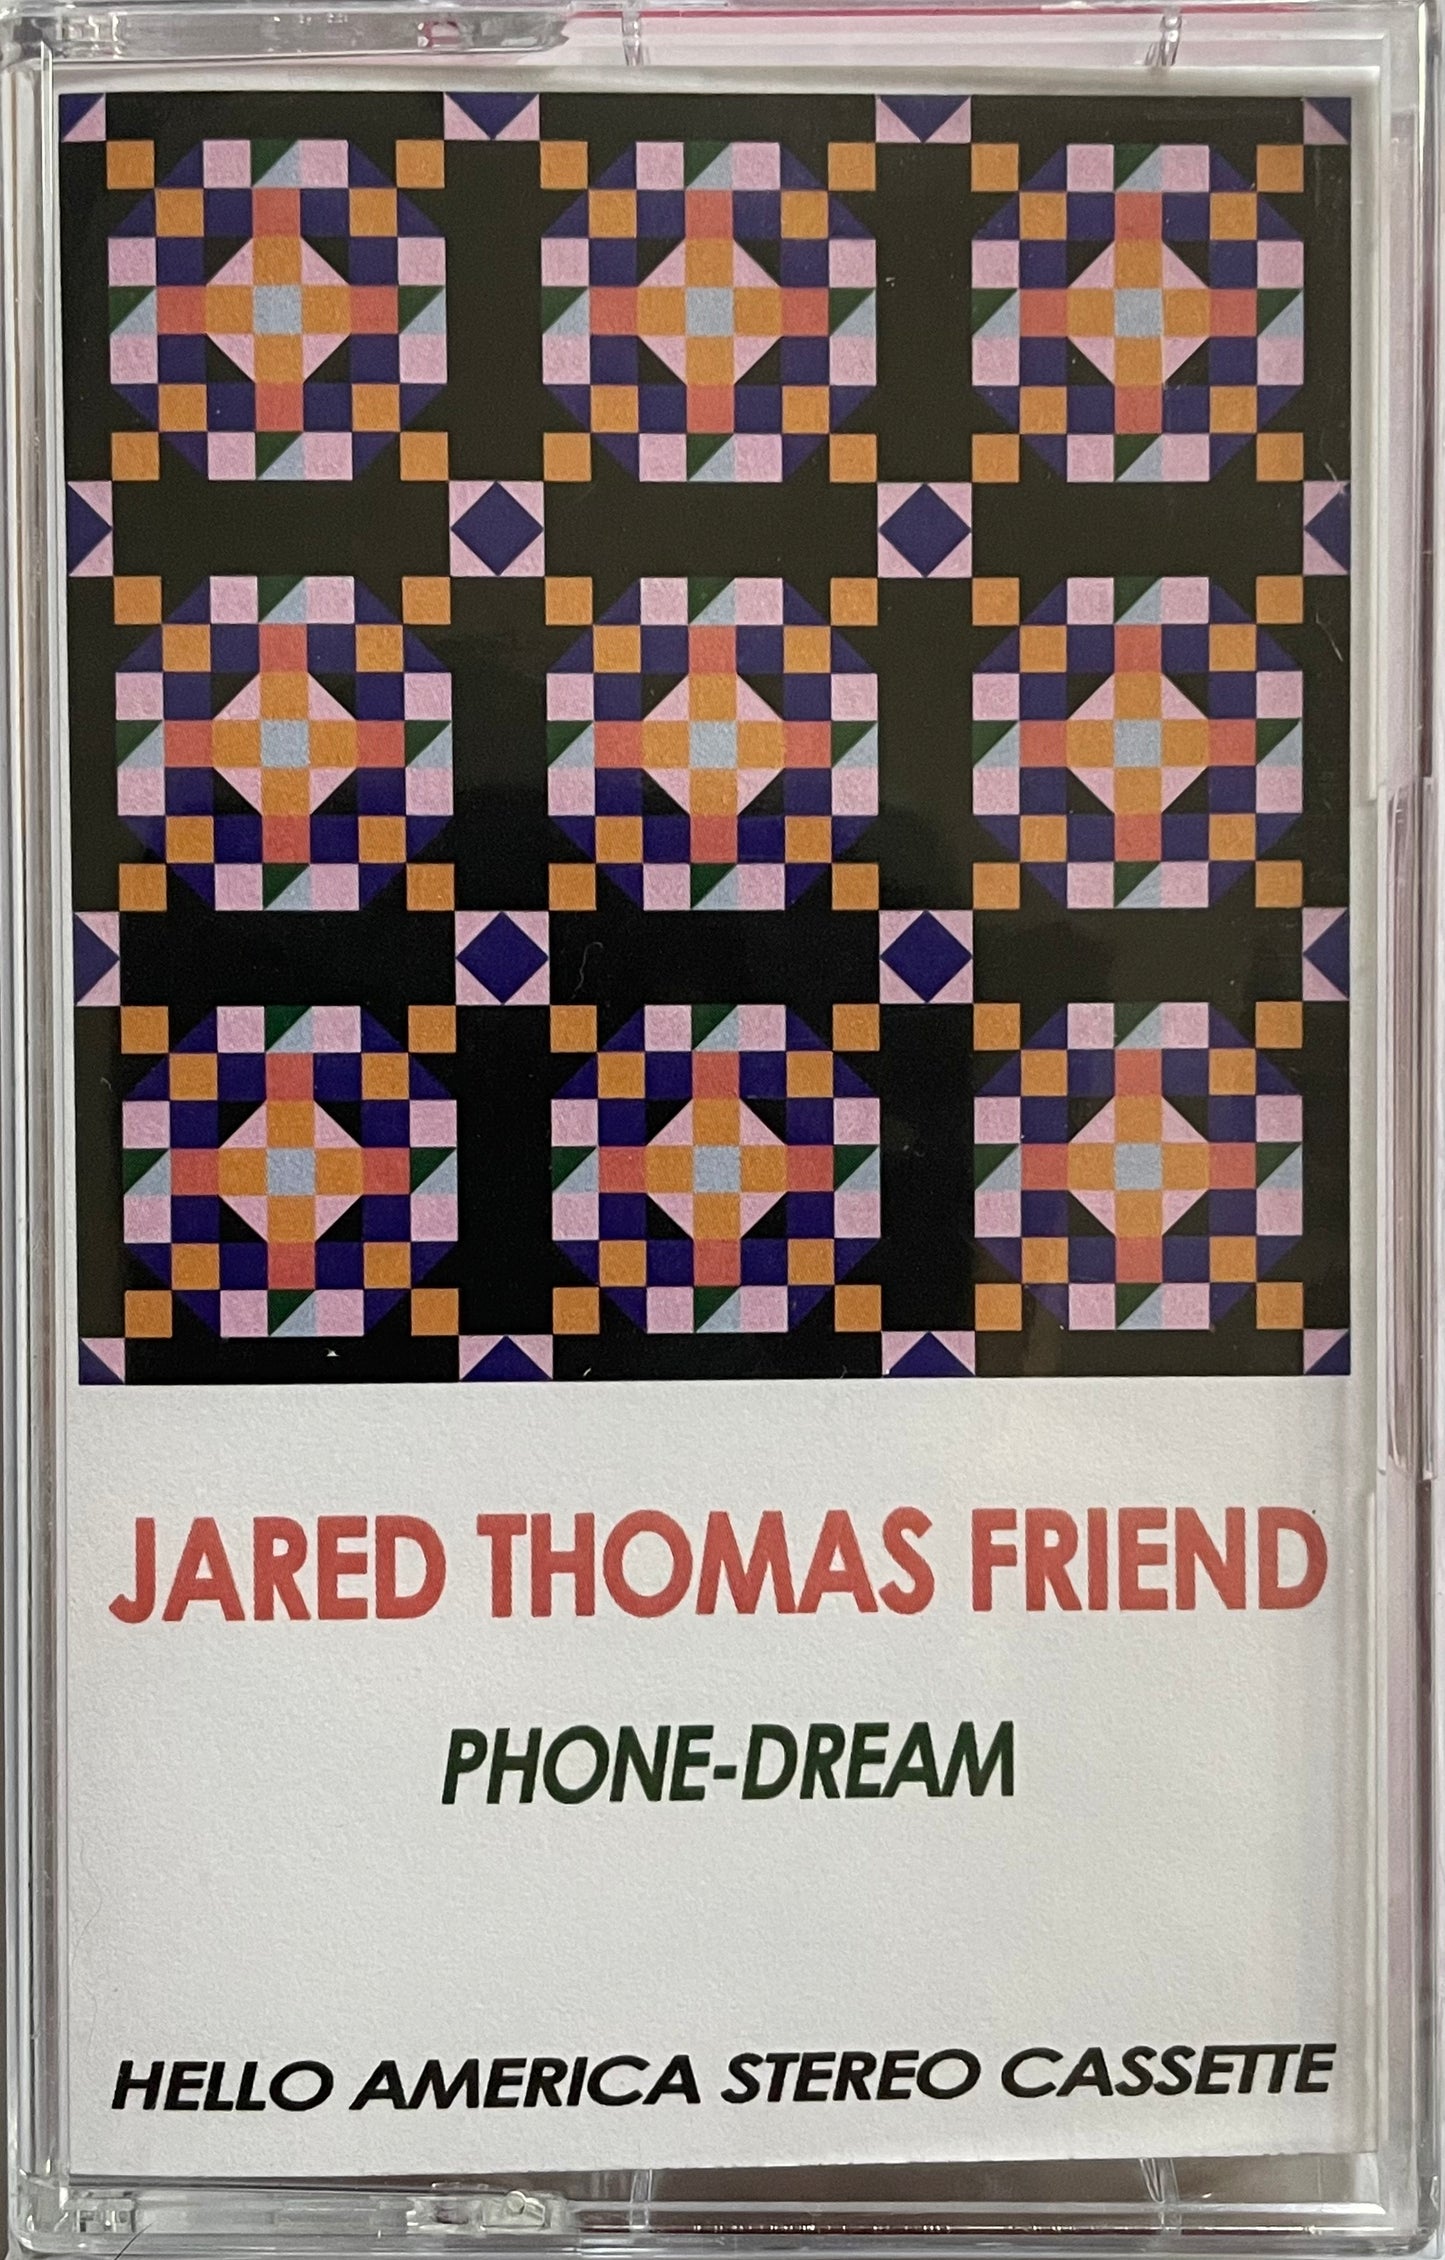 Phone-Dream, by Jared Thomas Friend